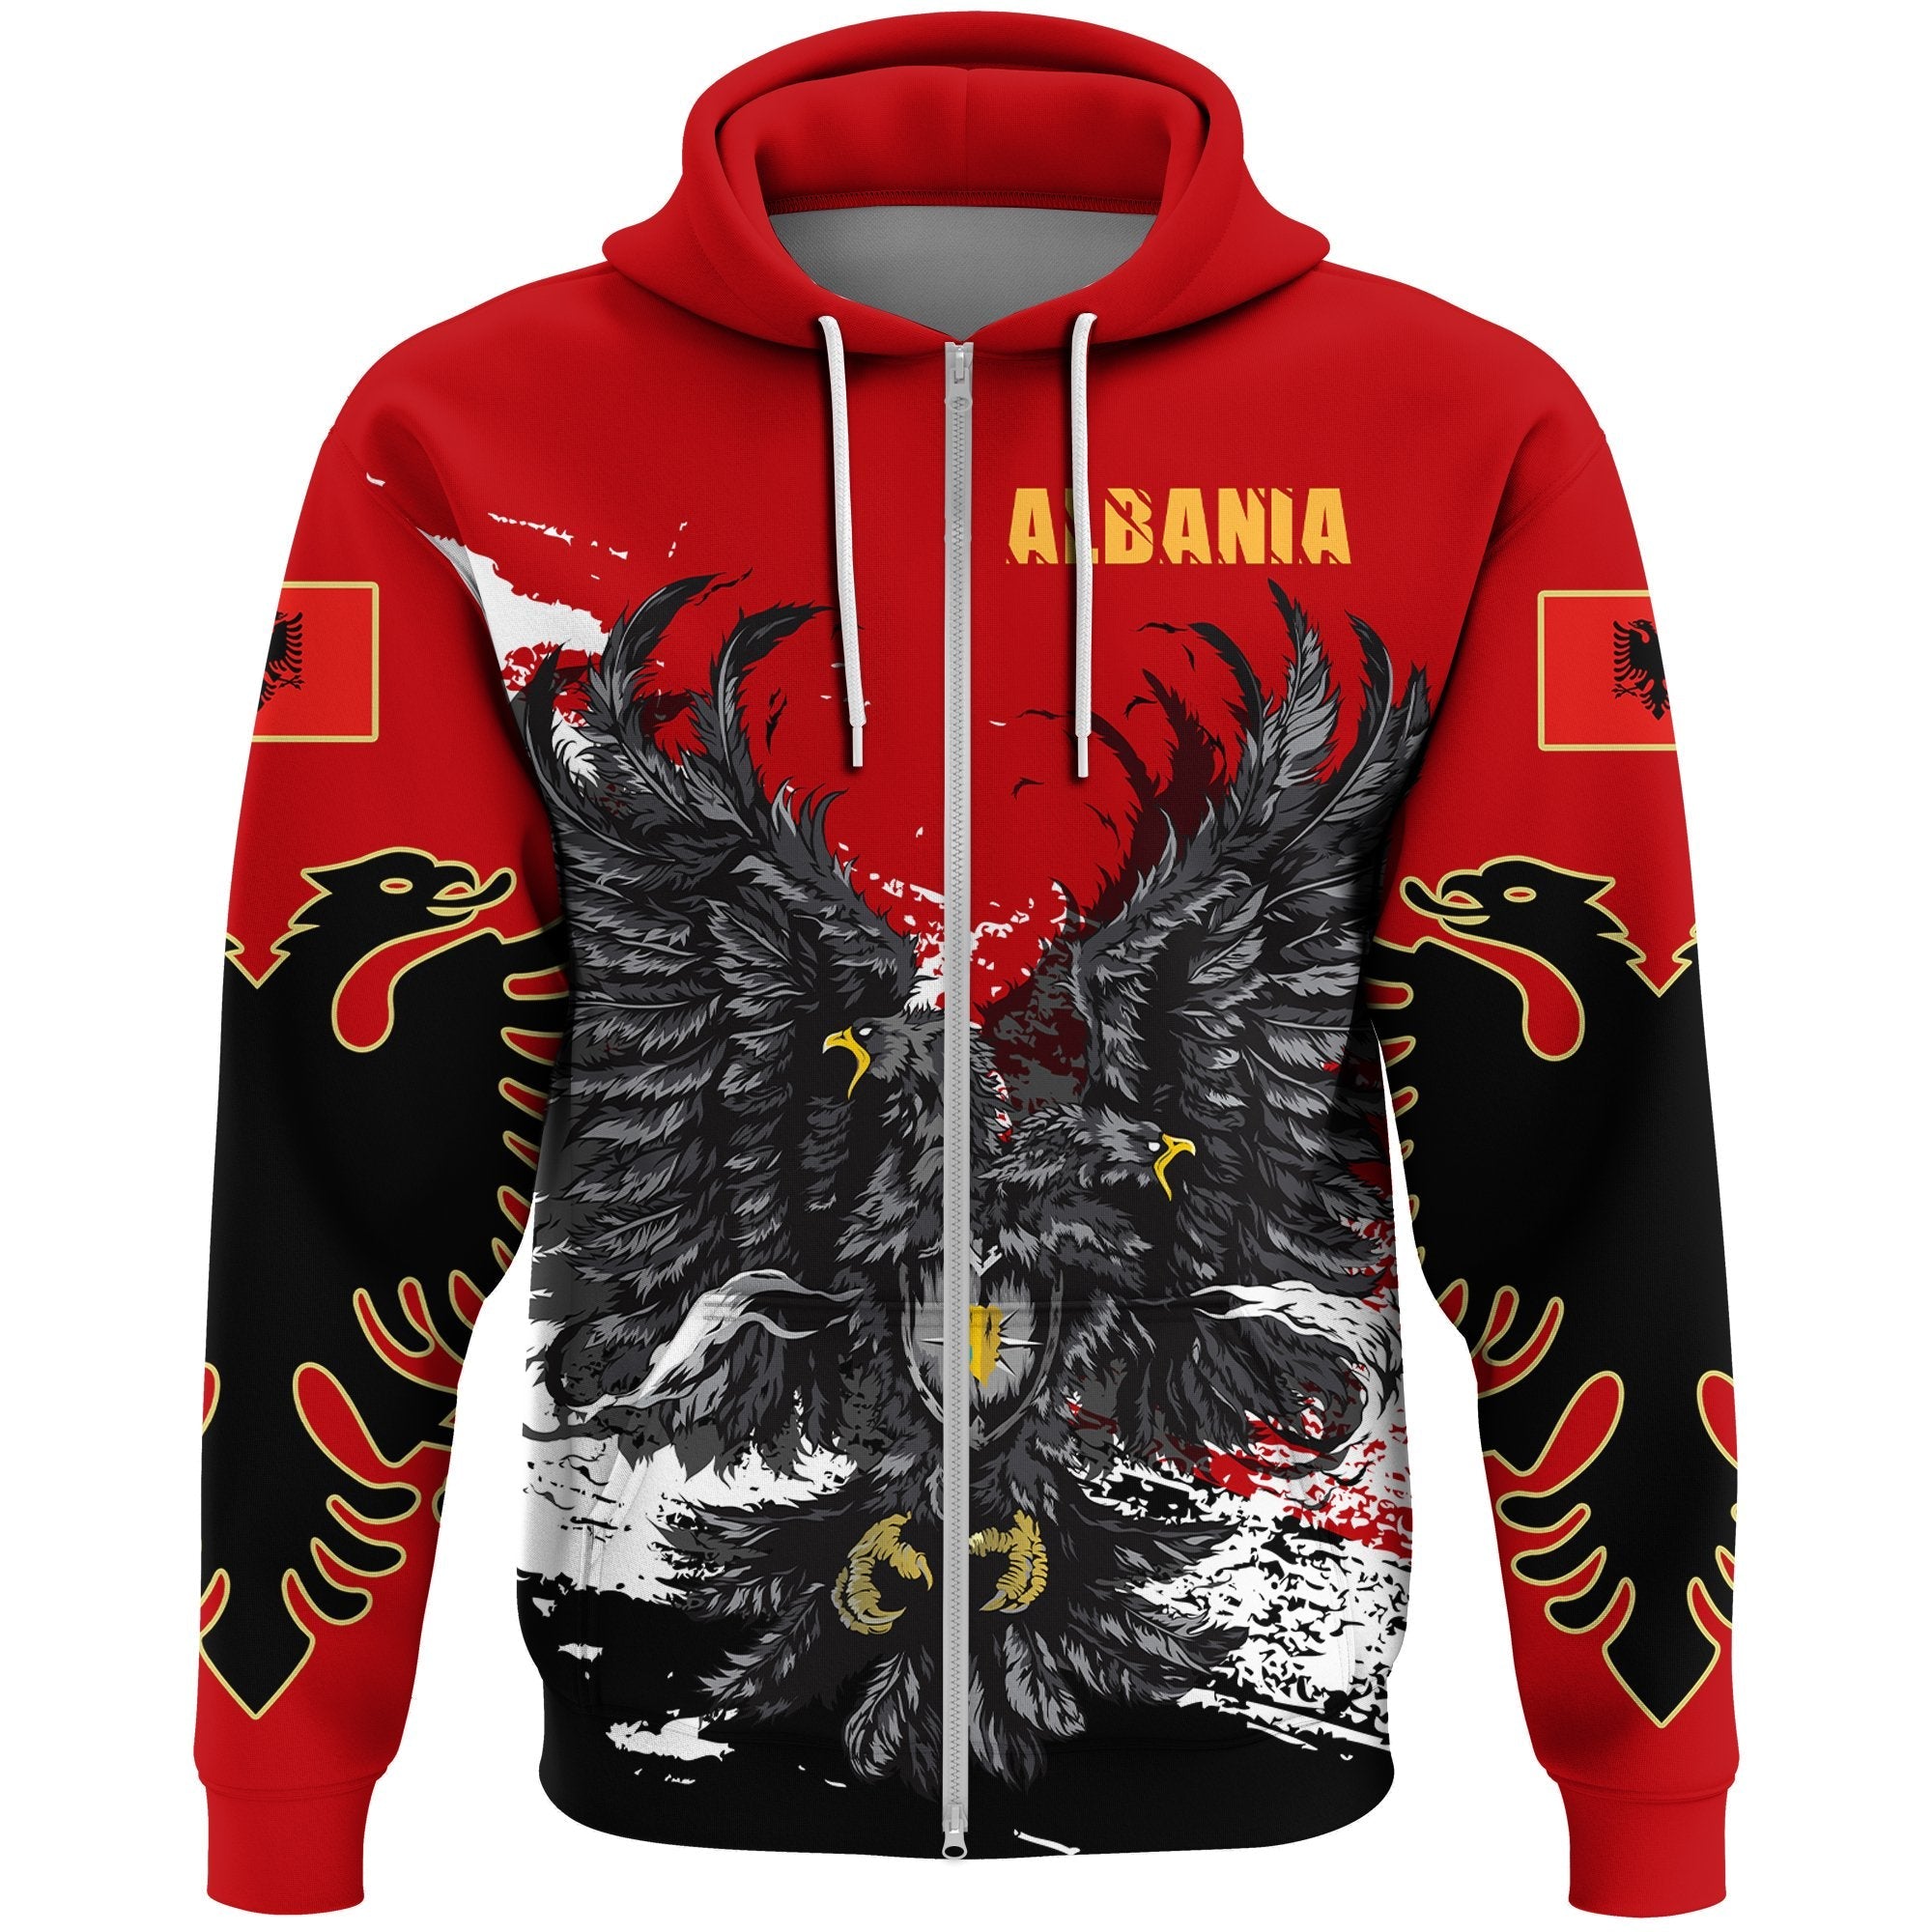 albania-special-golden-eagle-albanian-zip-hoodie